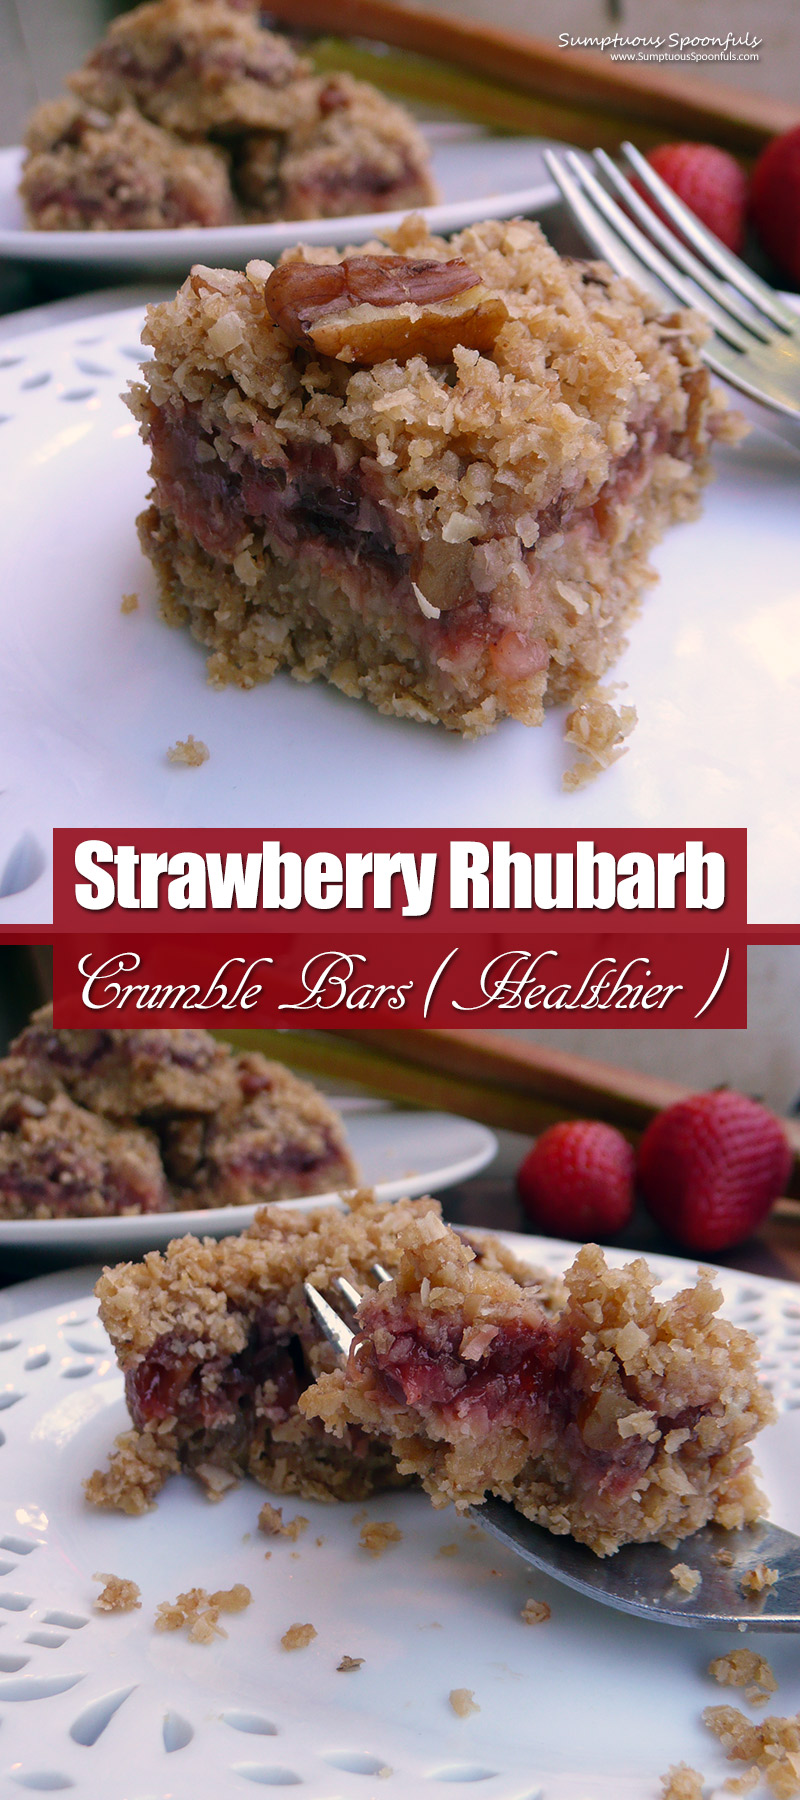 Strawberry Rhubarb Crumble Bars - a healthier option